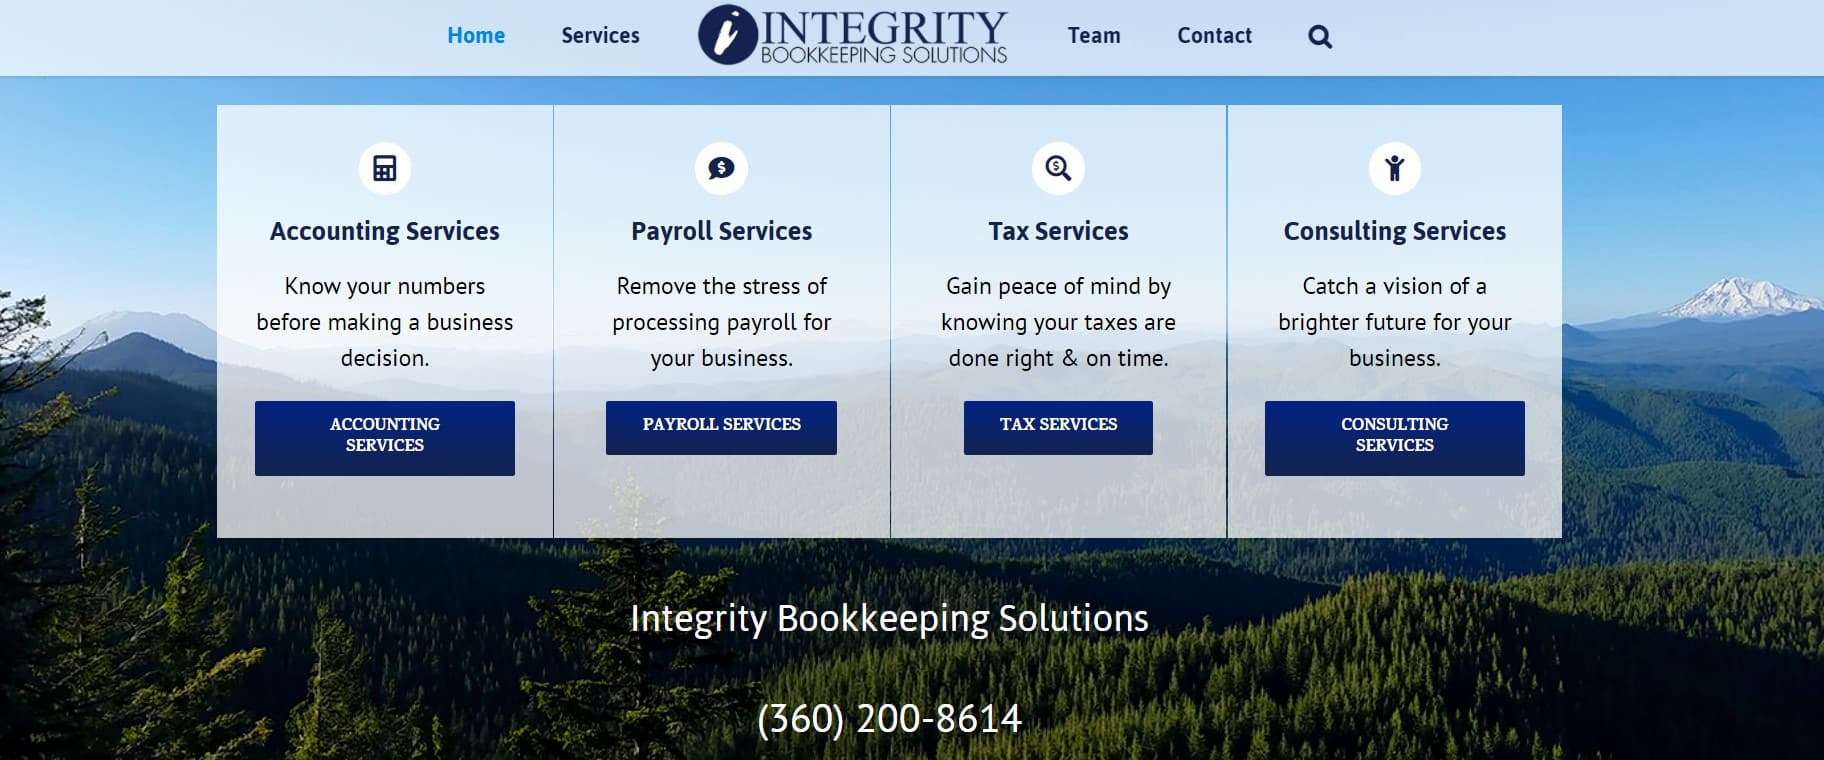 Integrity Bookkeeping